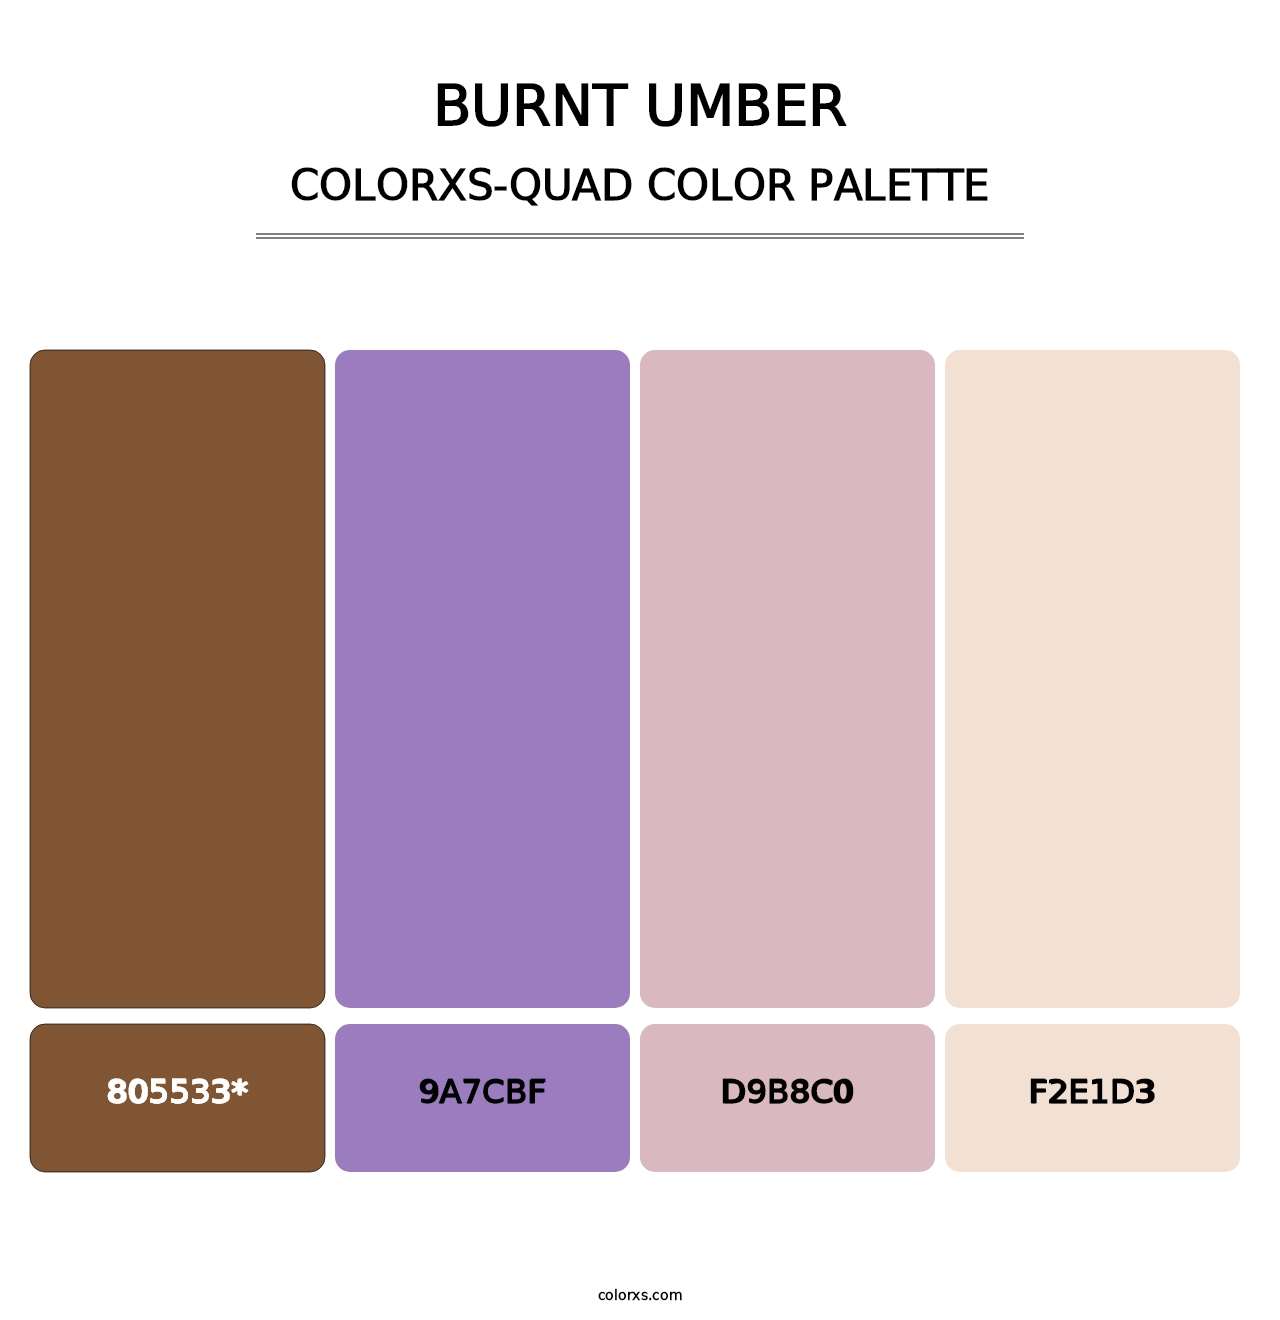 Burnt Umber - Colorxs Quad Palette